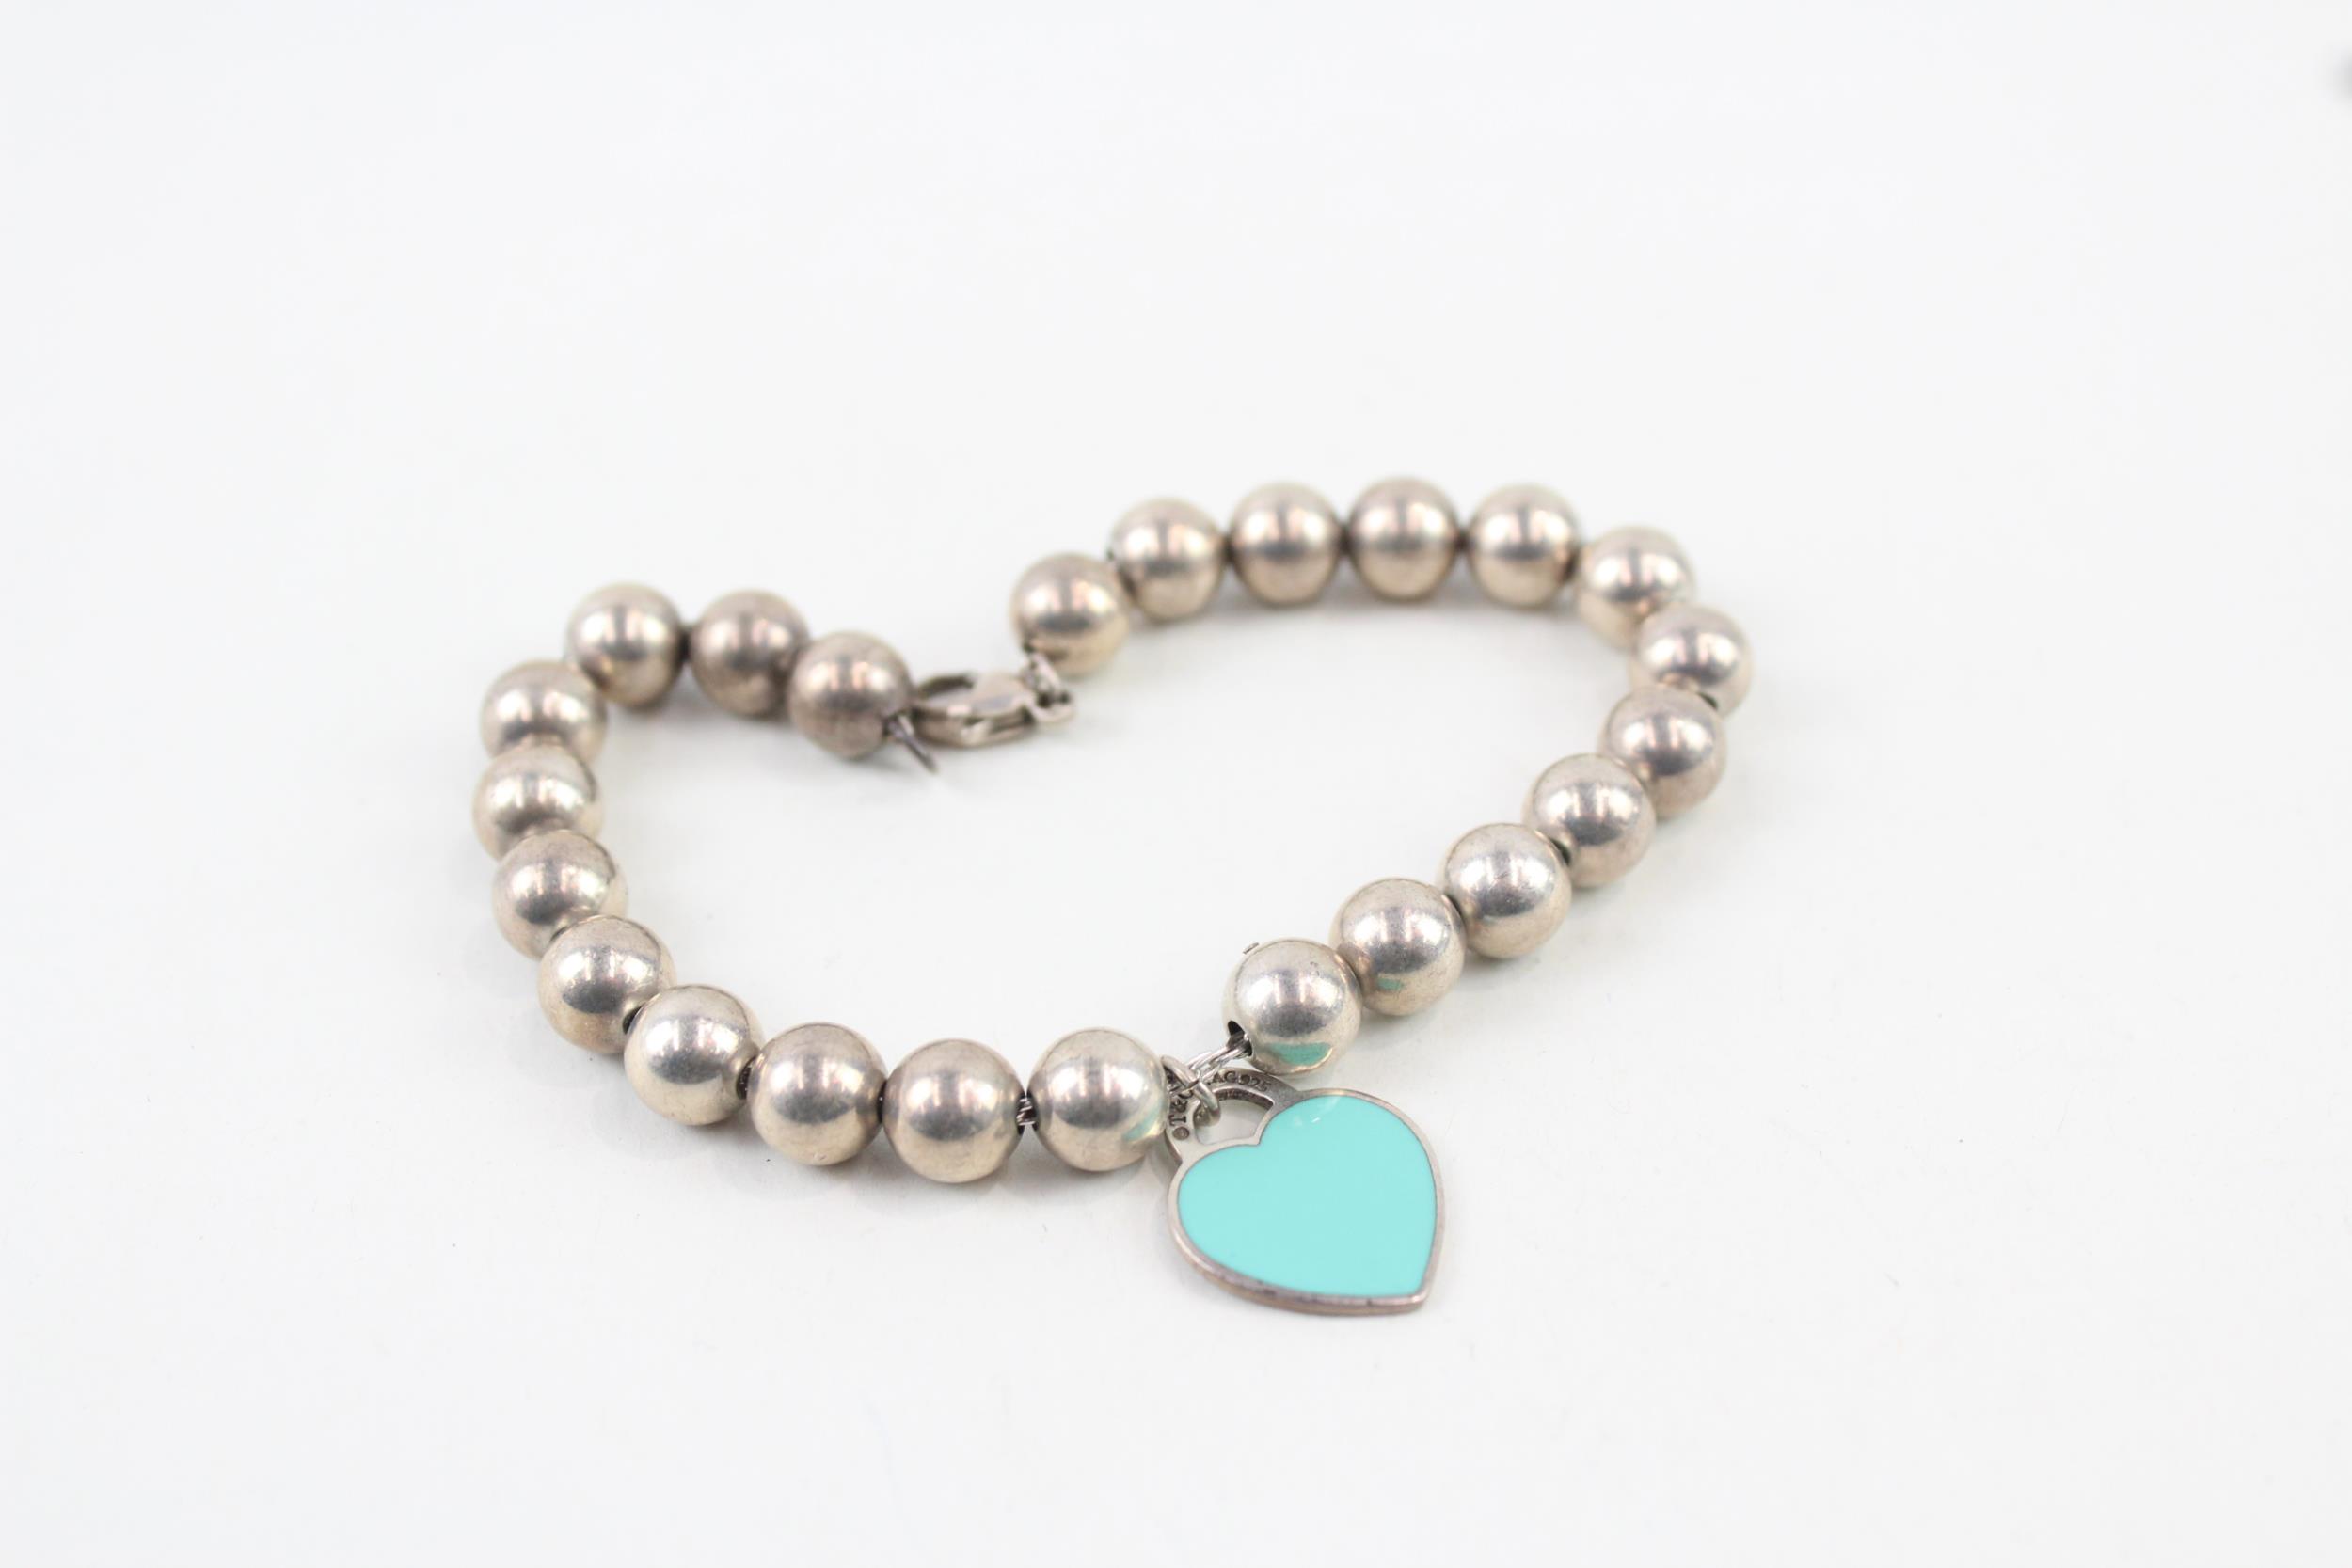 Silver bracelet with enamel heart charm by designer Tiffany & Co (16g)